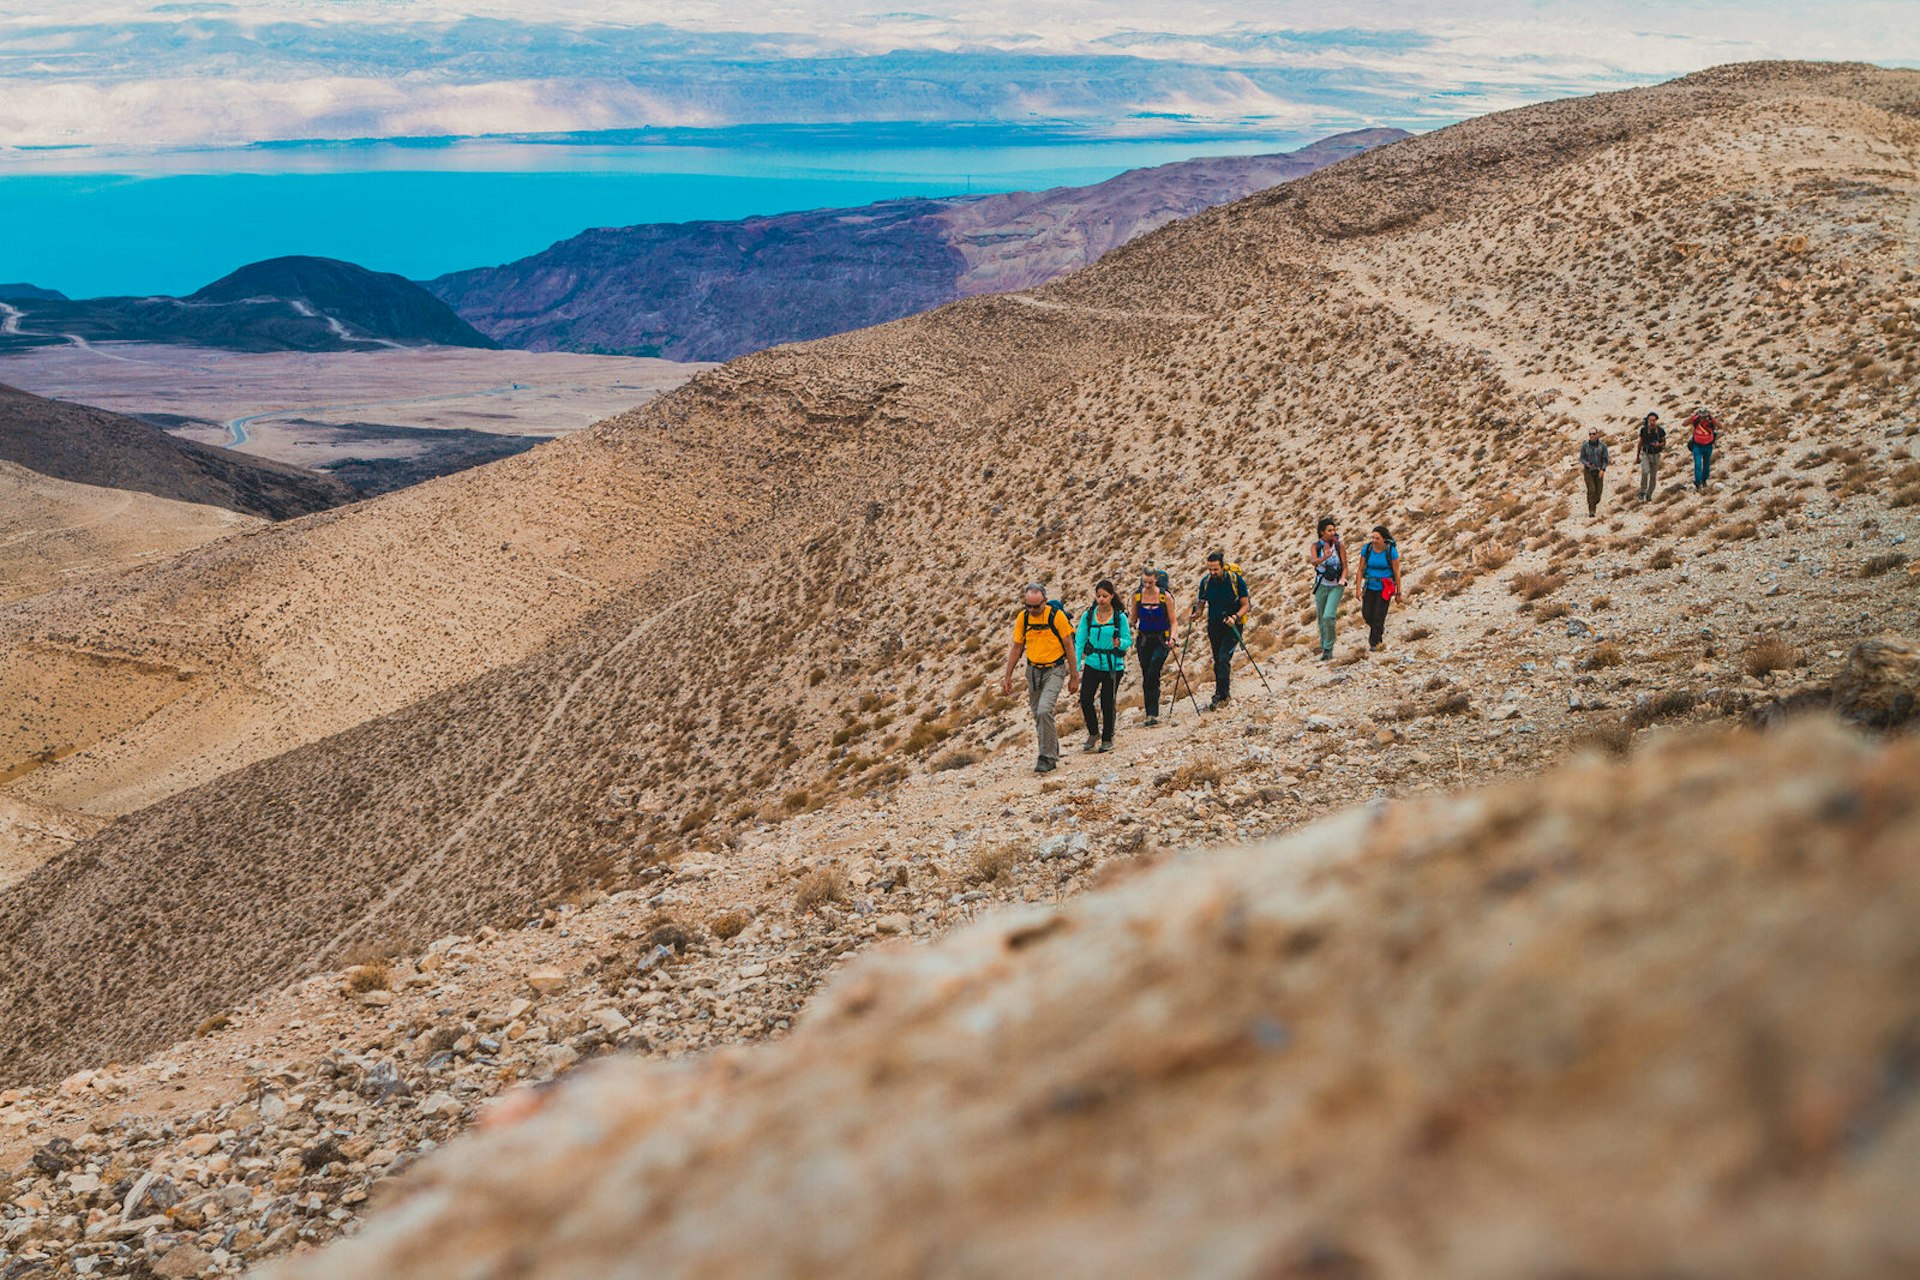 Hiking the Jordan Trail from Zarqa Main to Wadi Hidan. Image by Ali Barqawi Studios